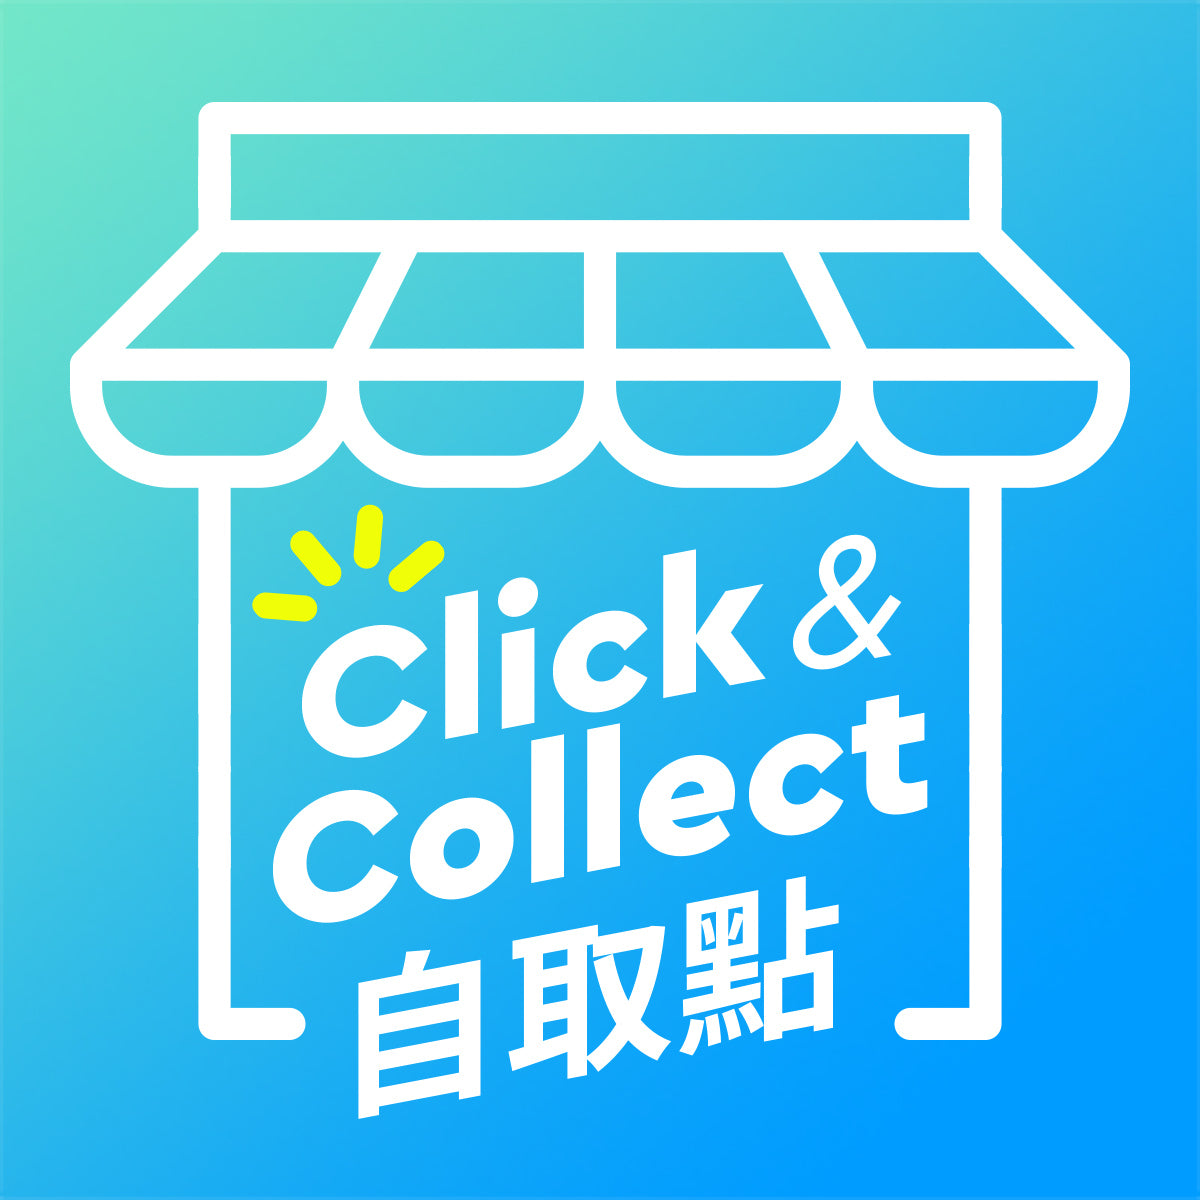 HK Pickup: Store & SF Express